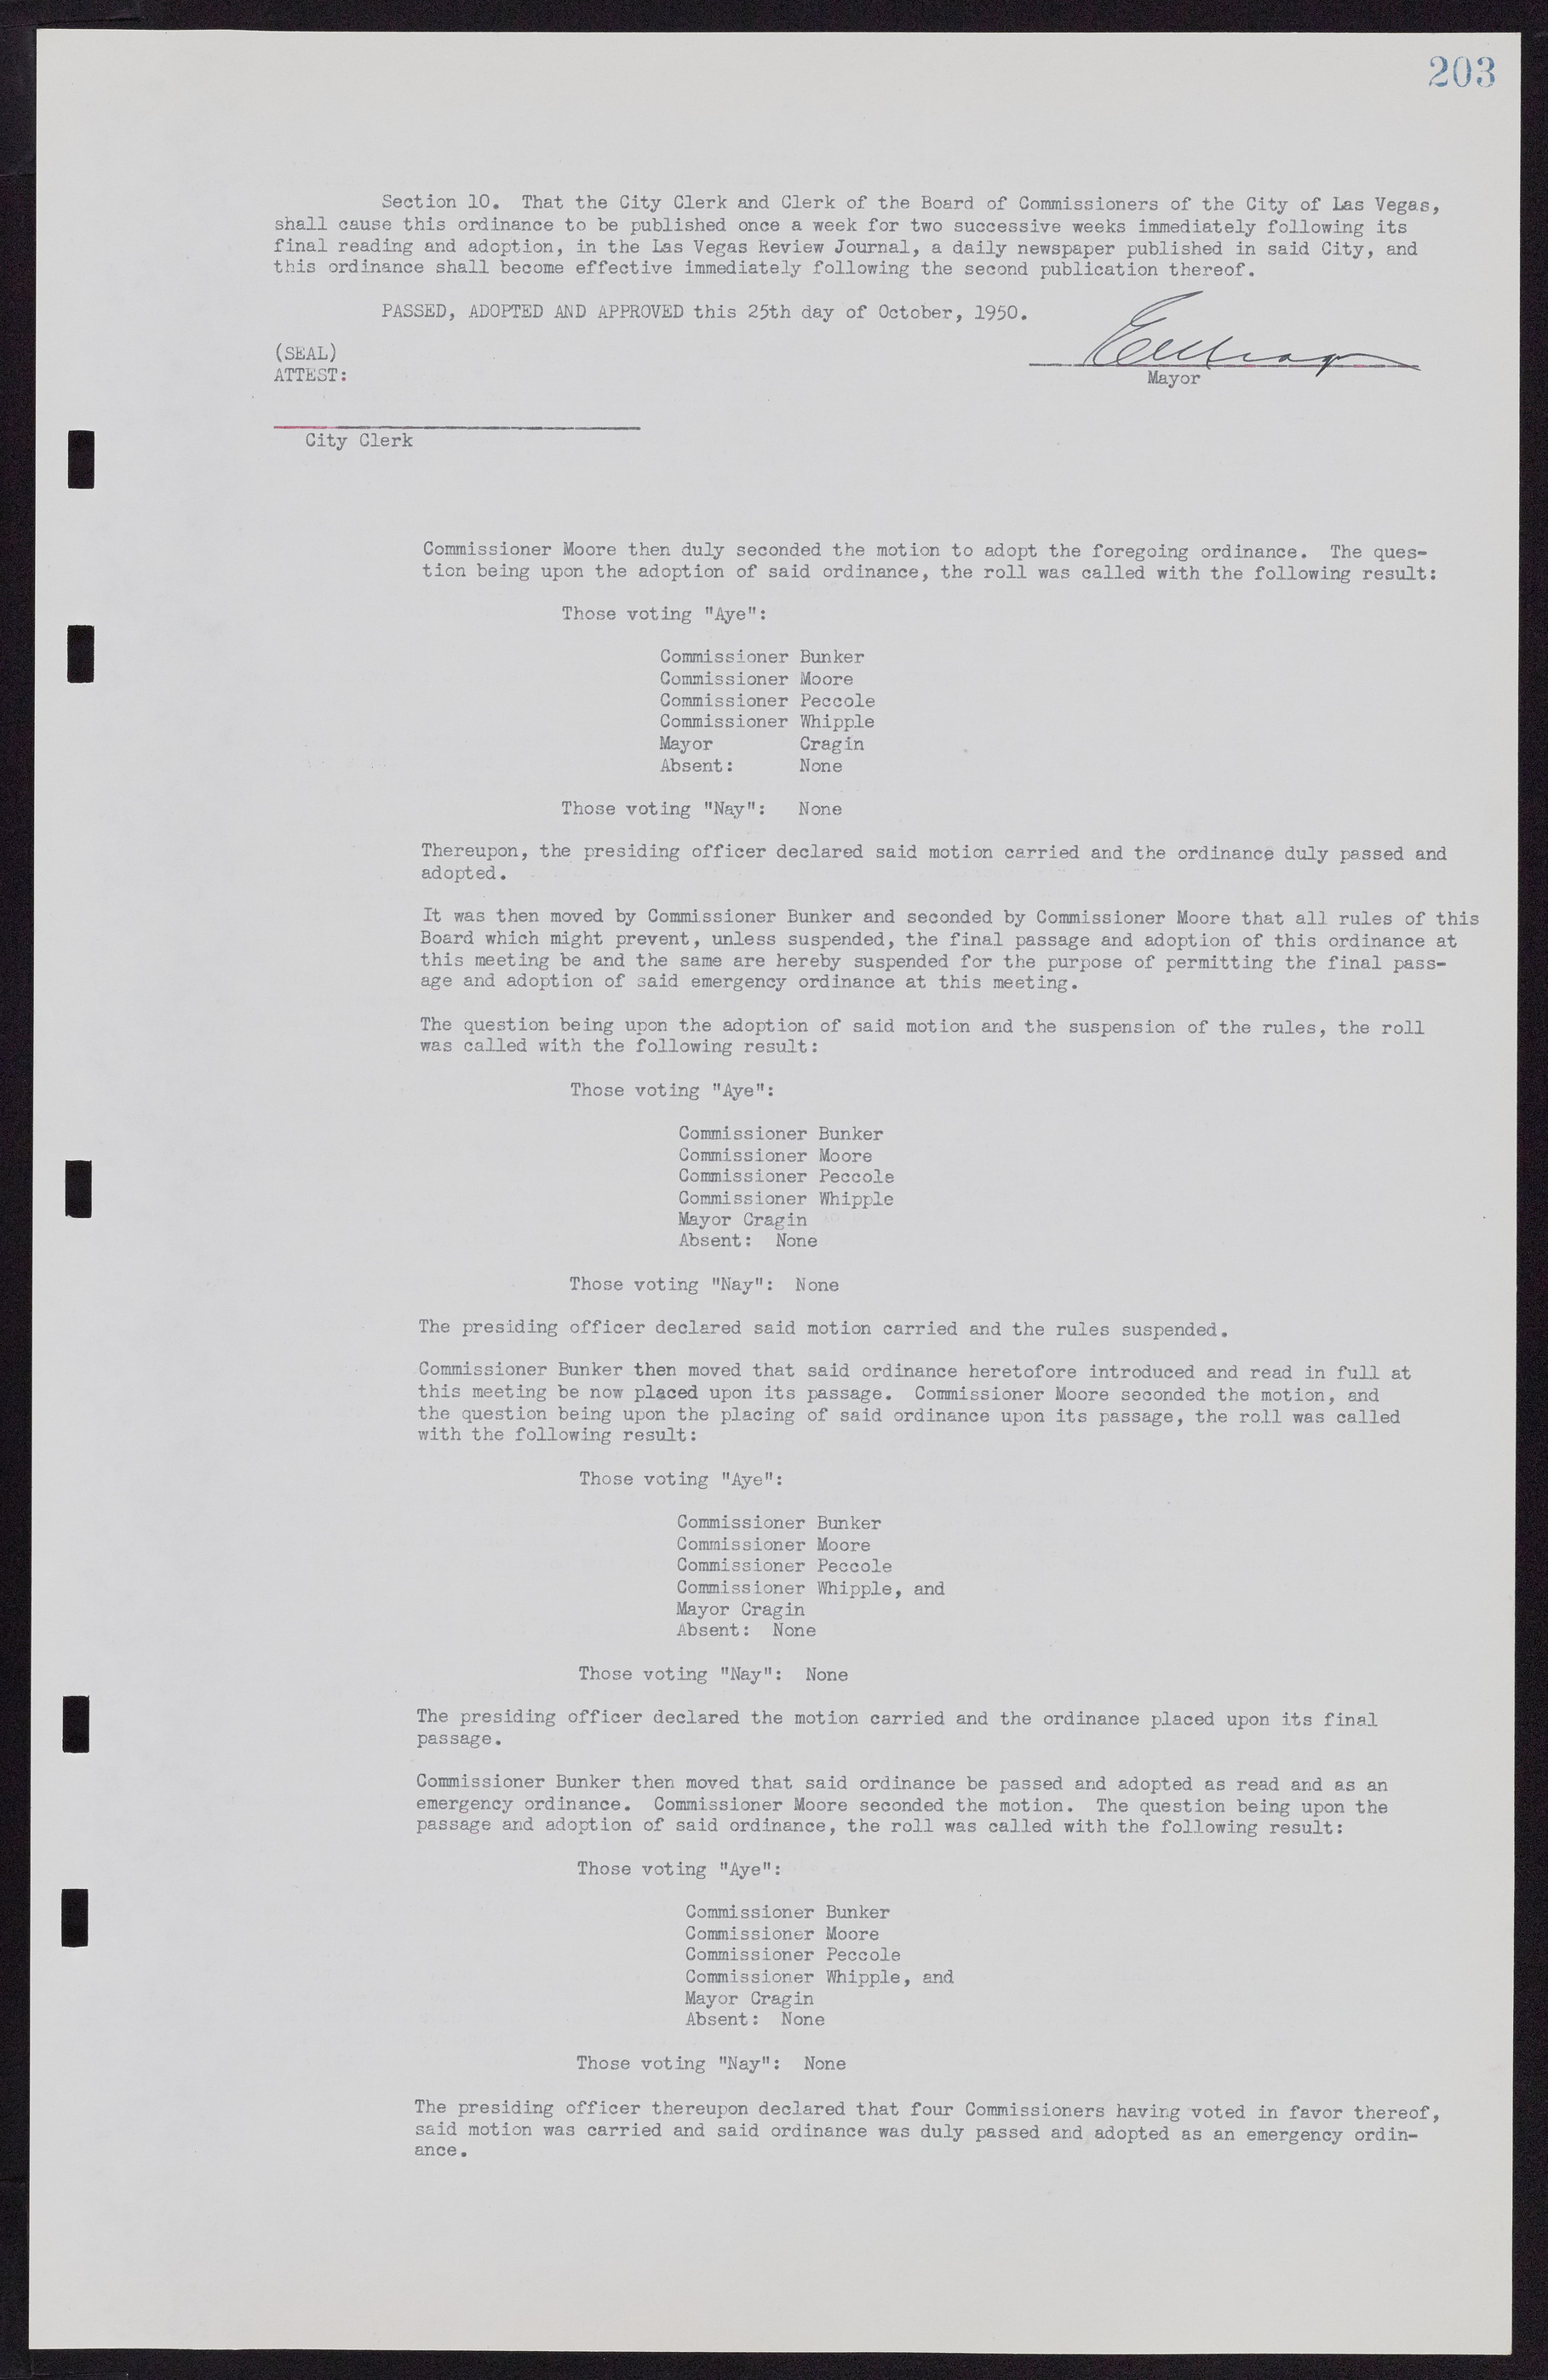 Las Vegas City Commission Minutes, November 7, 1949 to May 21, 1952, lvc000007-213